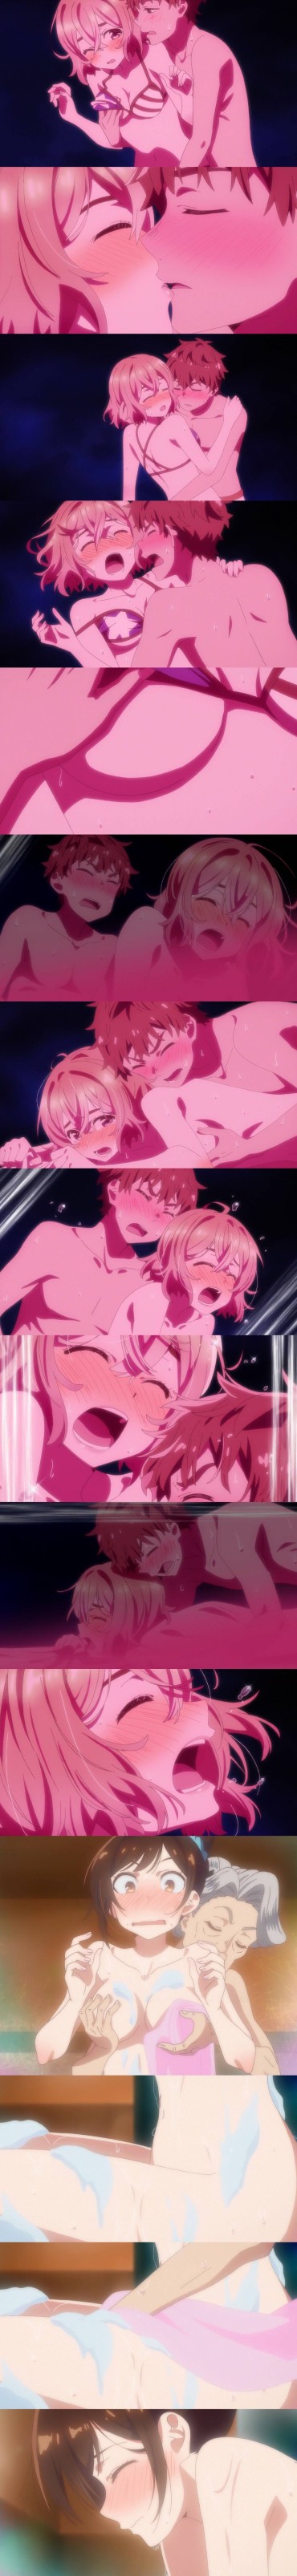 Phat Ass [Image] Anime This Term, Broadcast The Stately Etch Scene Www Www Futanari